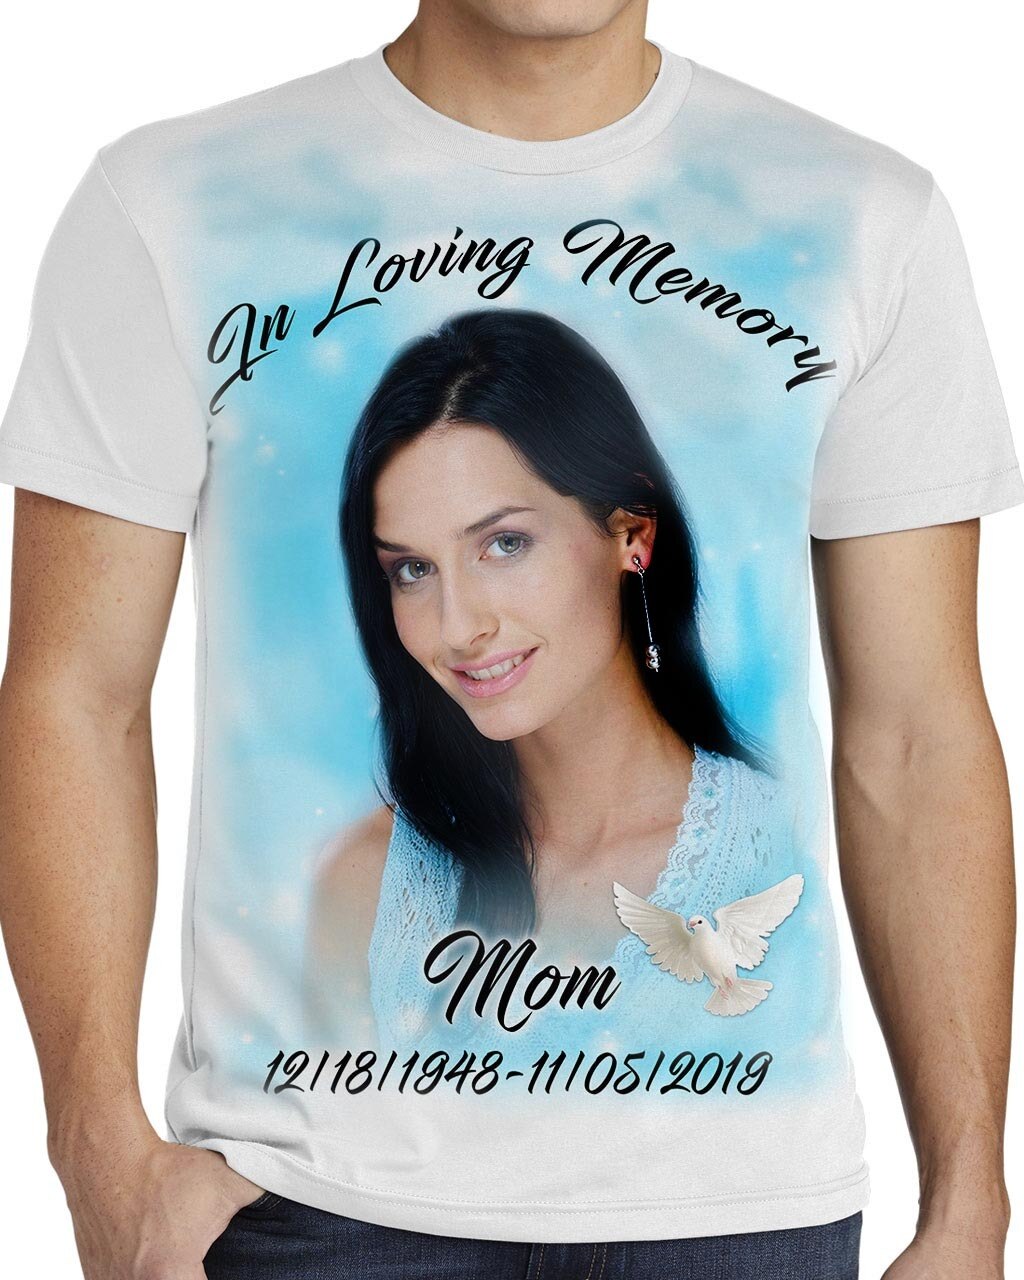 Rest In Peace In Loving Memory T-Shirt Teal Lights (Men-Women).